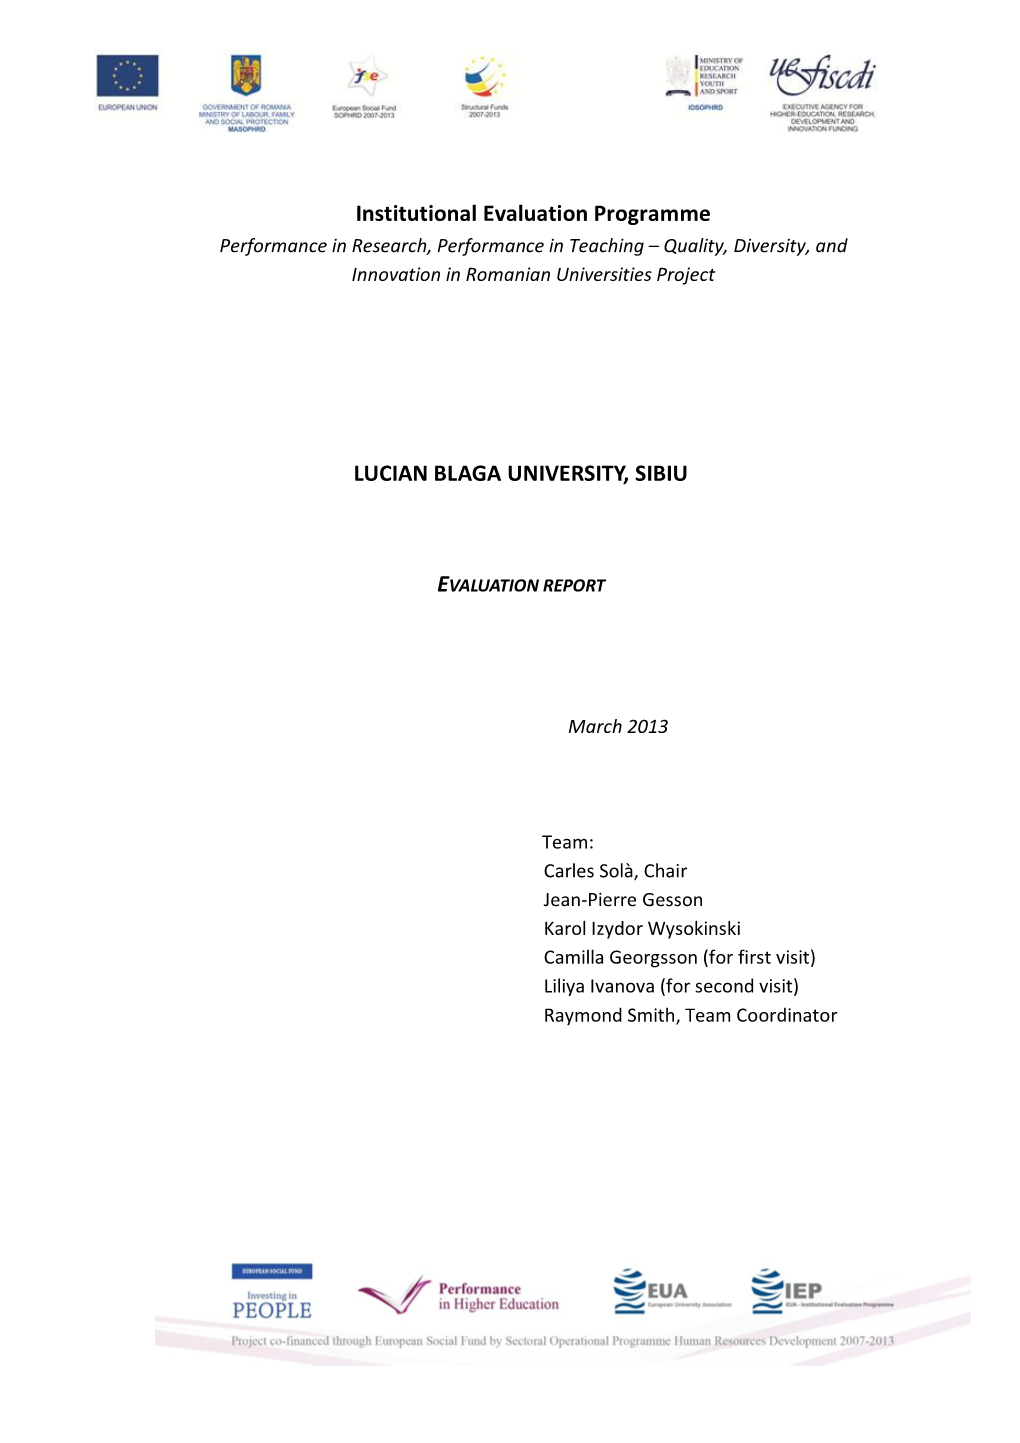 Institutional Evaluation Programme LUCIAN BLAGA UNIVERSITY, SIBIU